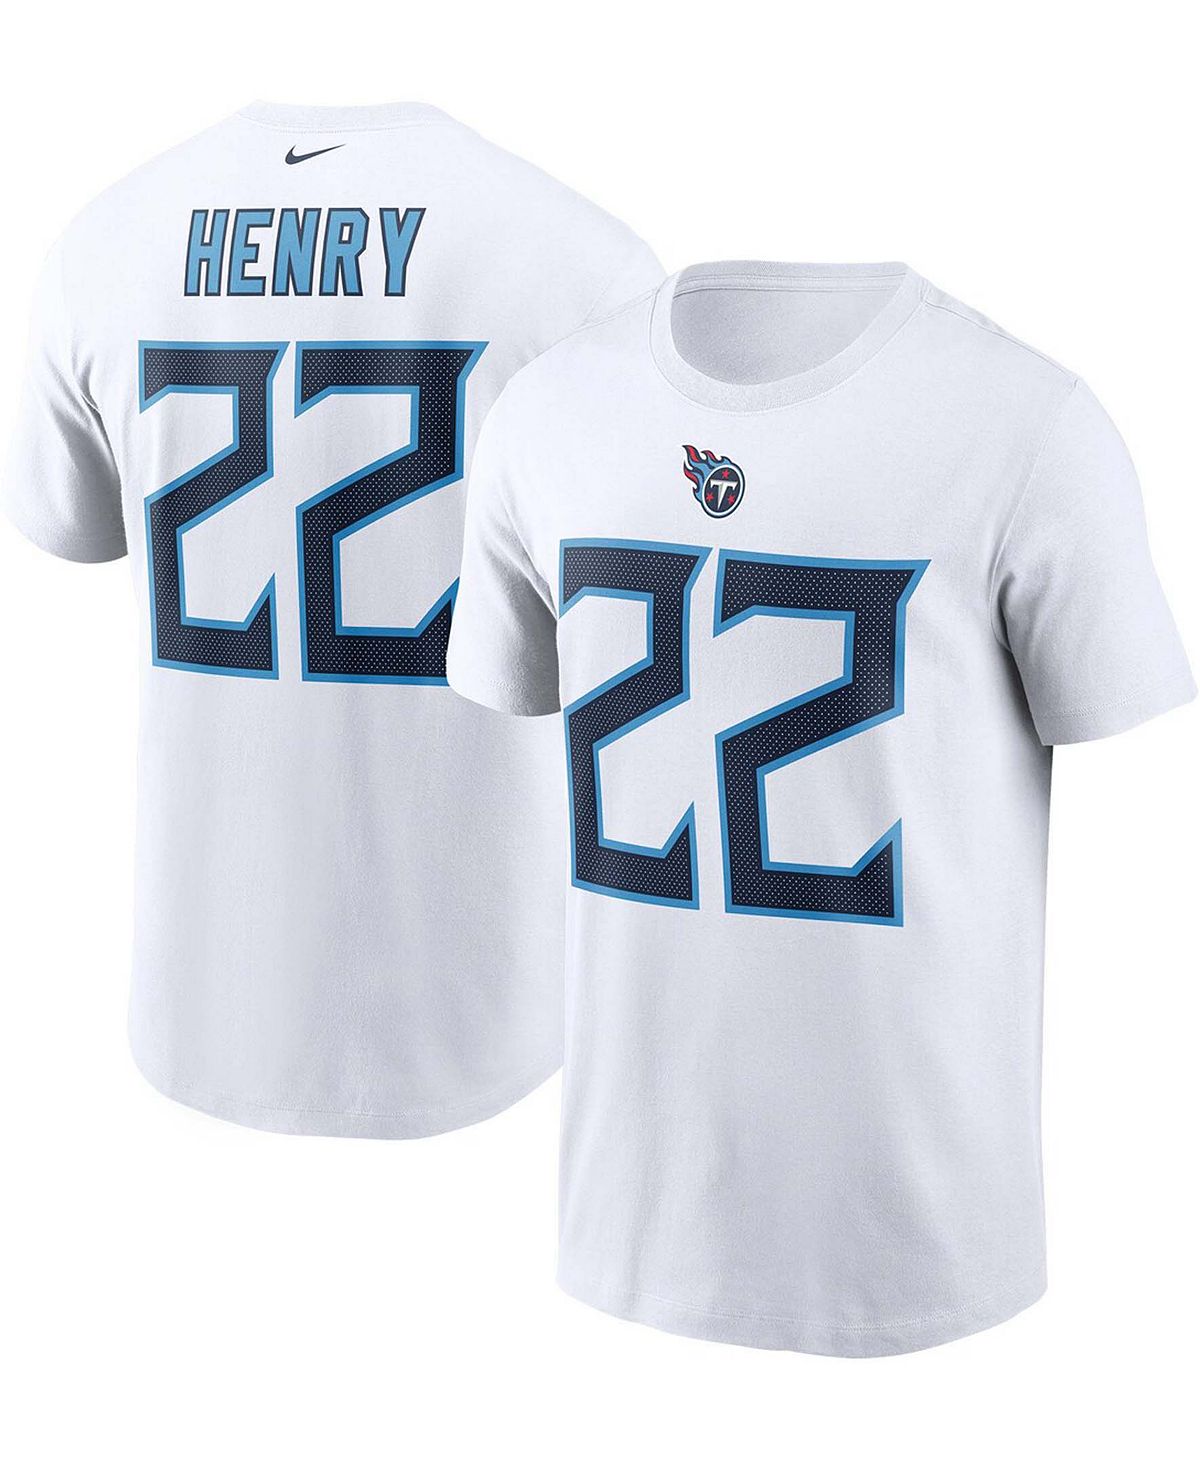 Мужская футболка с именем и номером Derrick Генри Уайт Tennessee Titans Nike